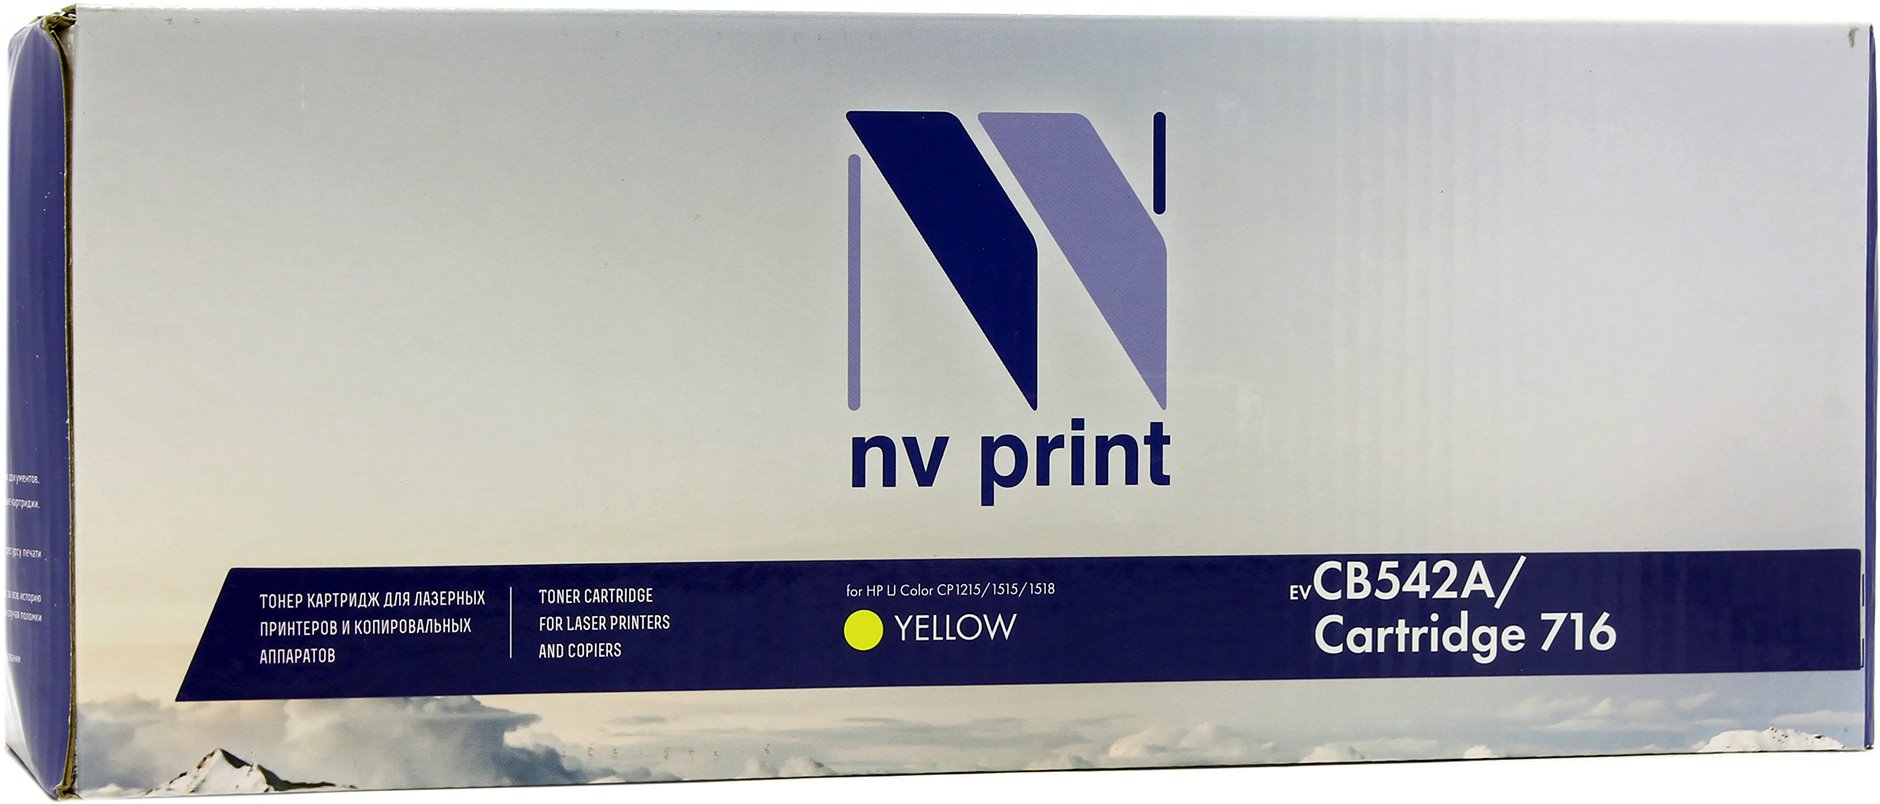   NV-Print  Canon i-SENSYS LBP5050/ MF8030/8050, Cartridge 716 Yellow